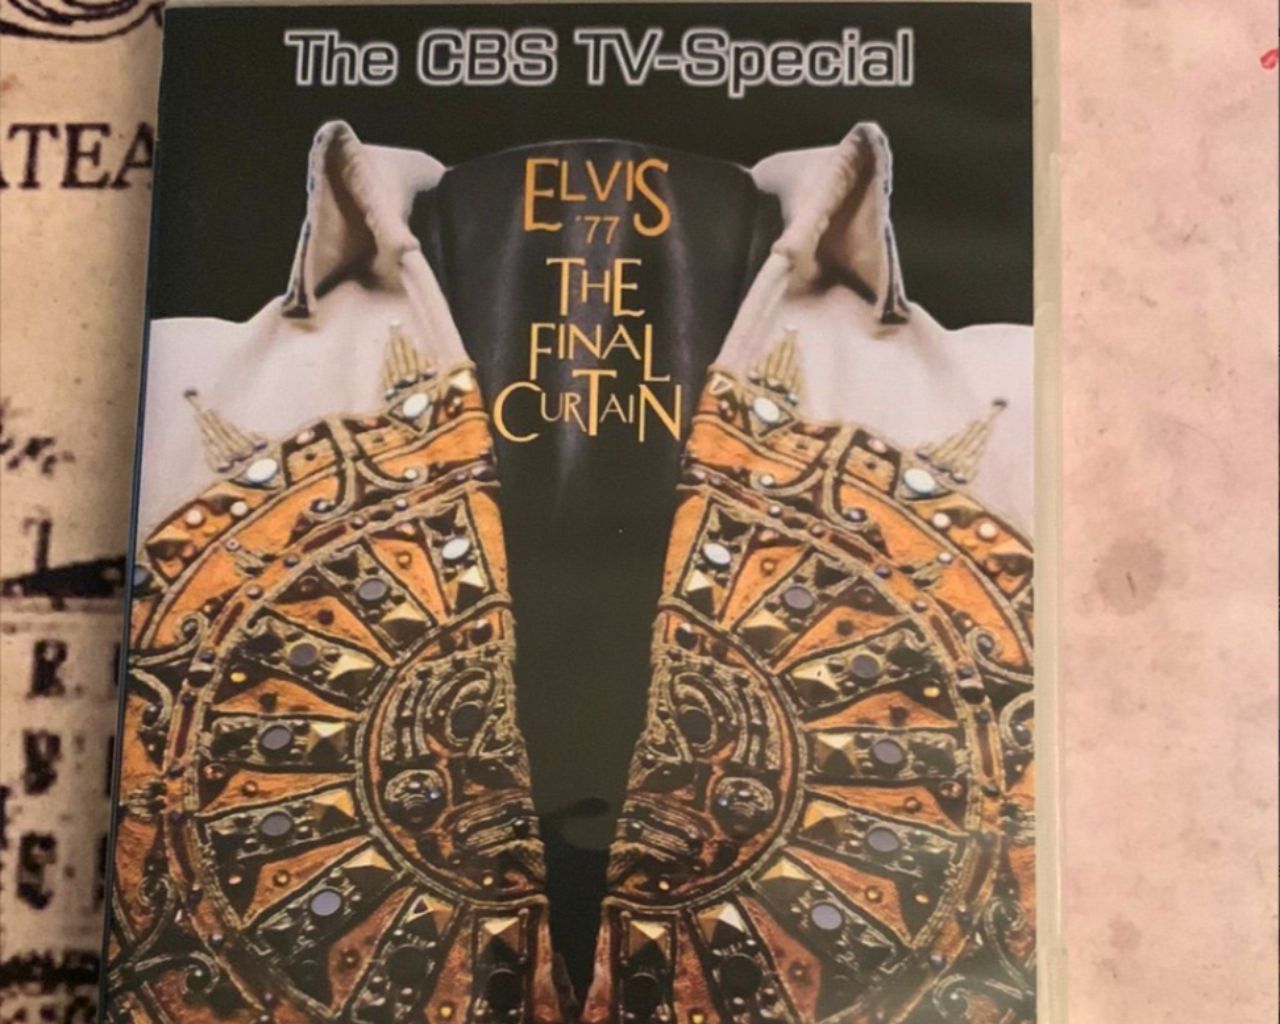 Elvis In Concert 1977 CBS TV Special Complete DVD Collection